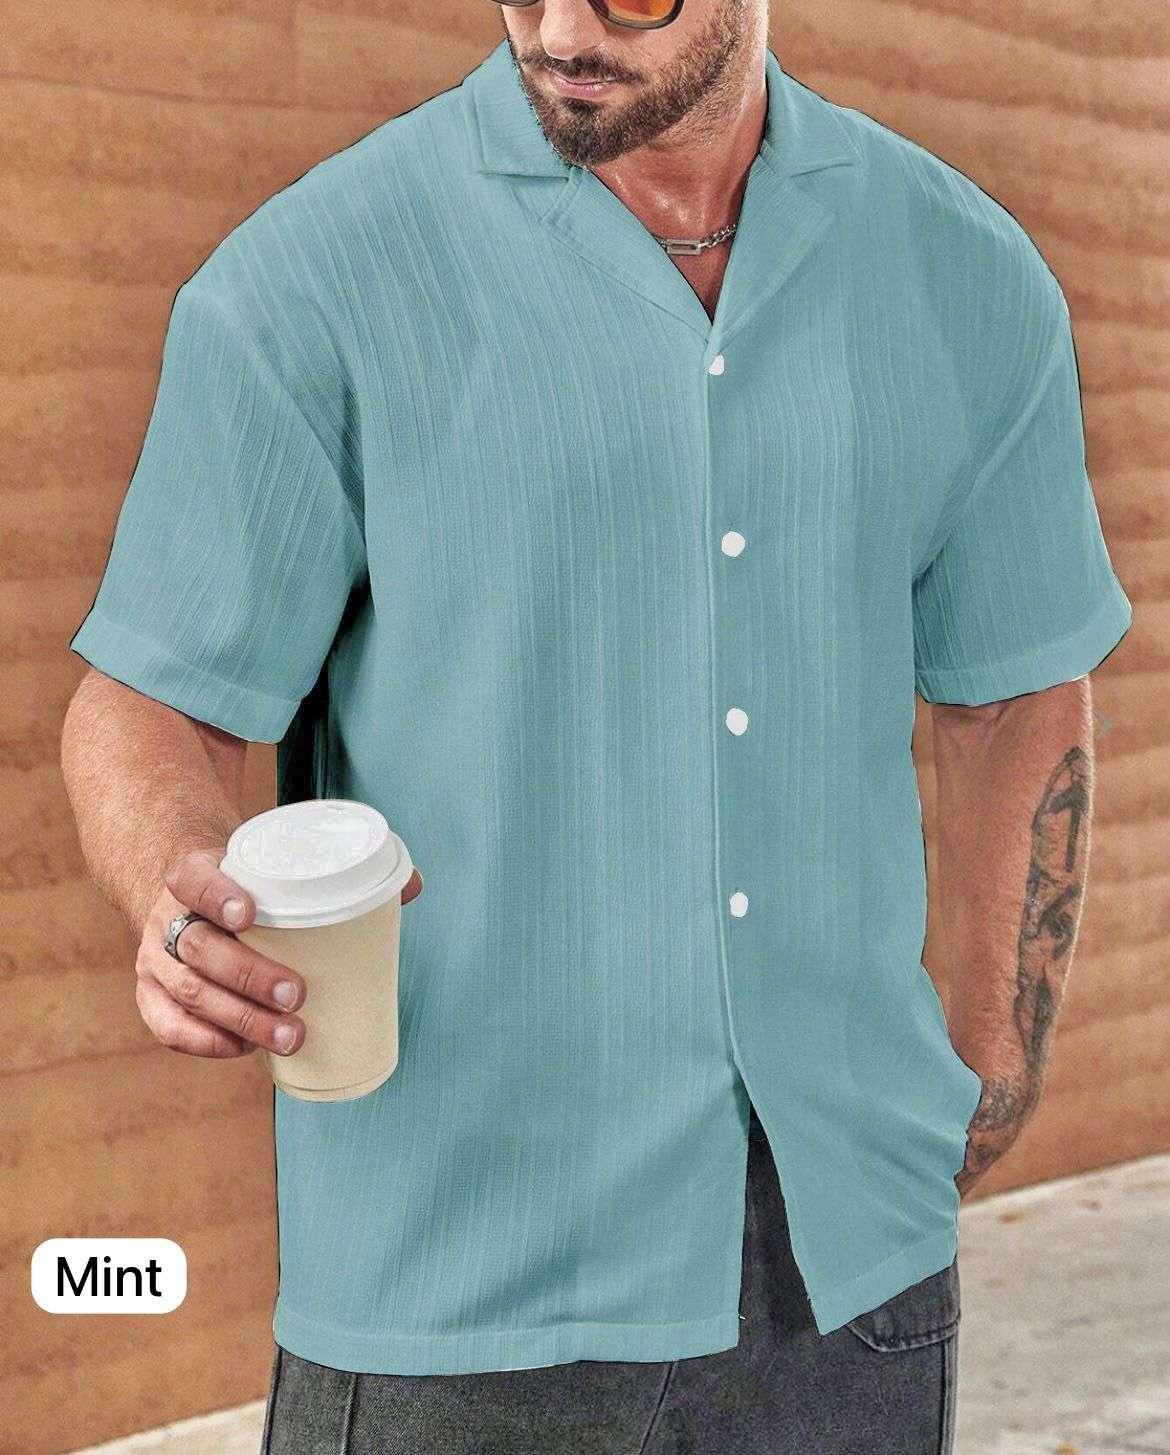 Cuban Boys Soft fabric Sugar-can Textured Collar Shirt For regular and Vacation